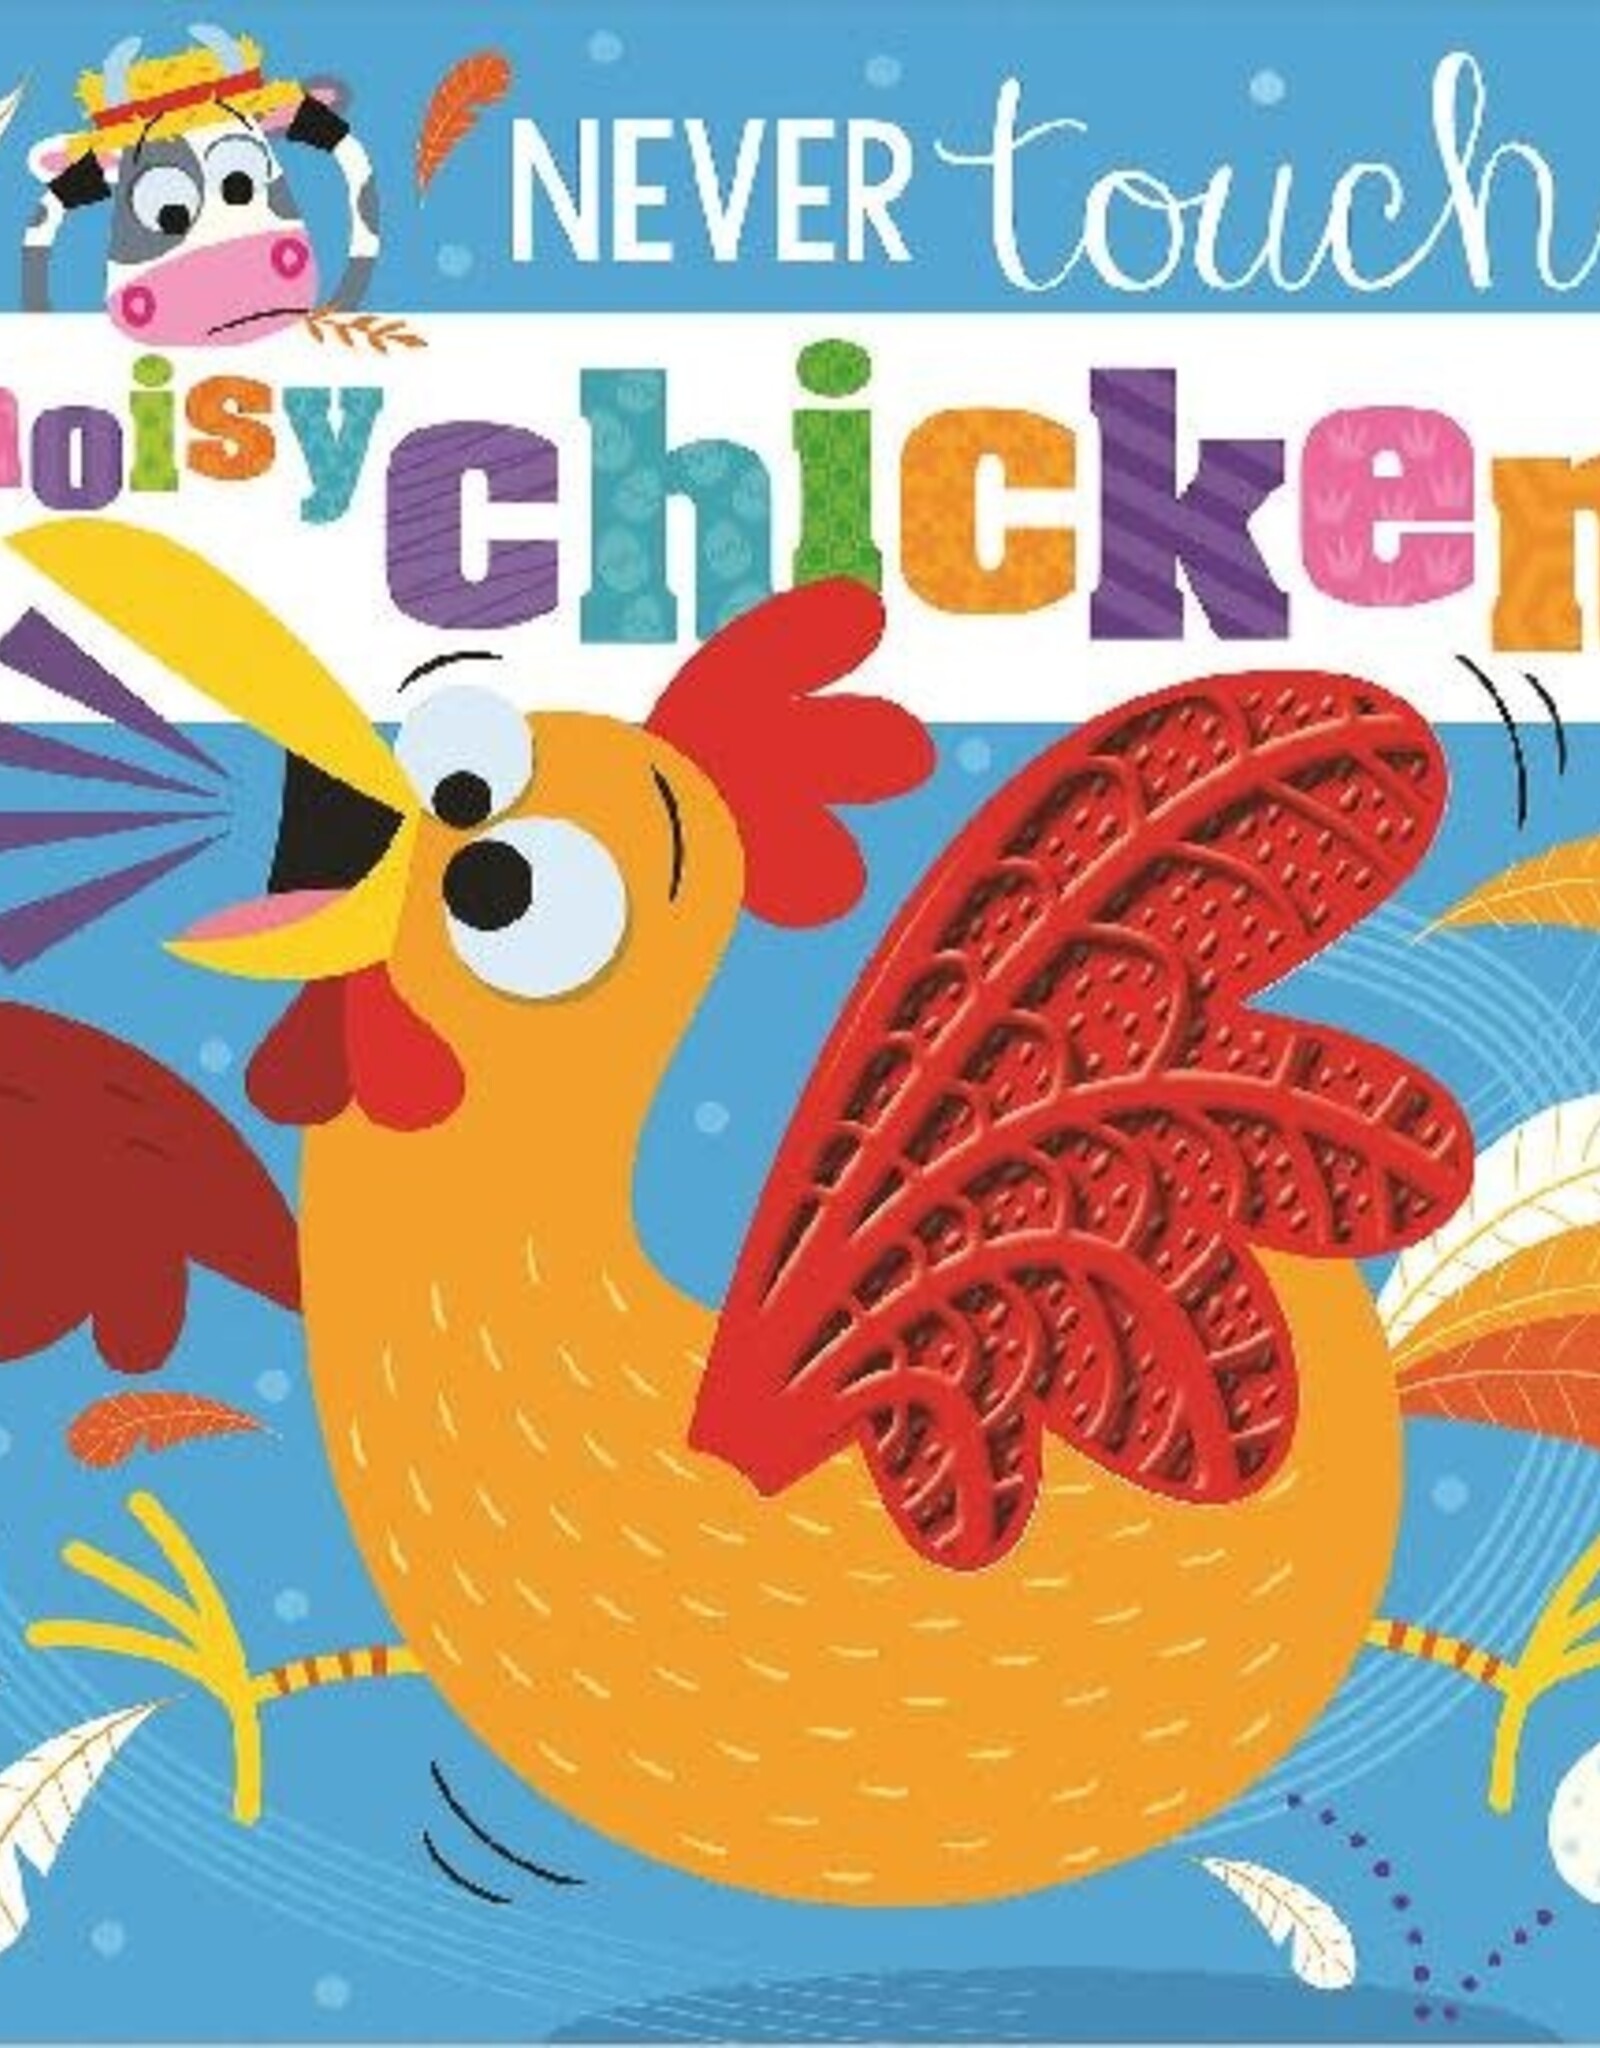 Make Believe Ideas Never Touch a   Noisy Chicken Board Book